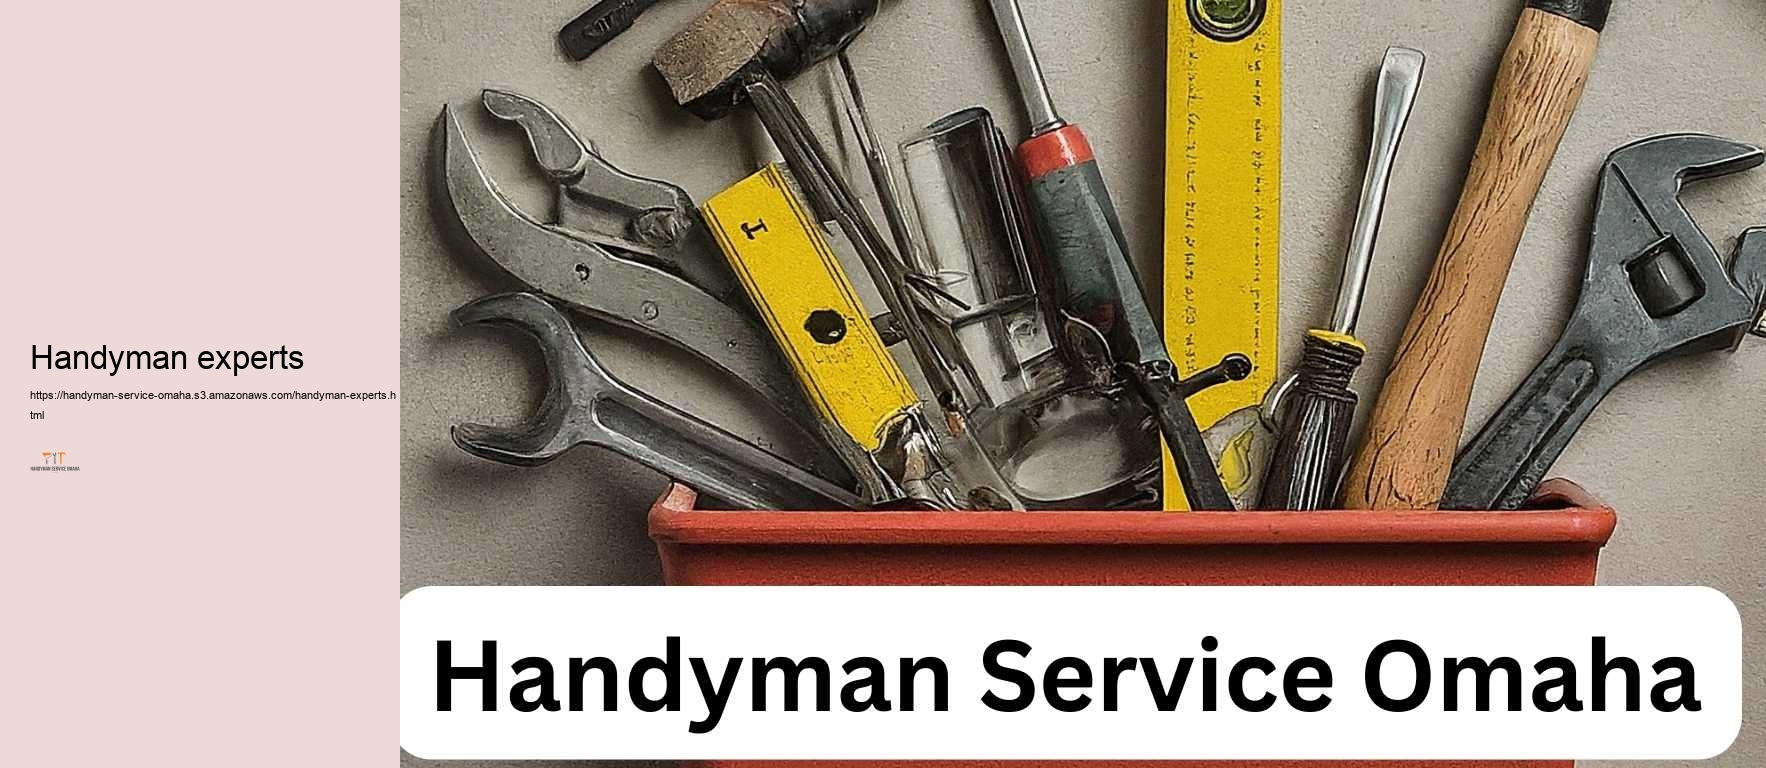 Handyman experts